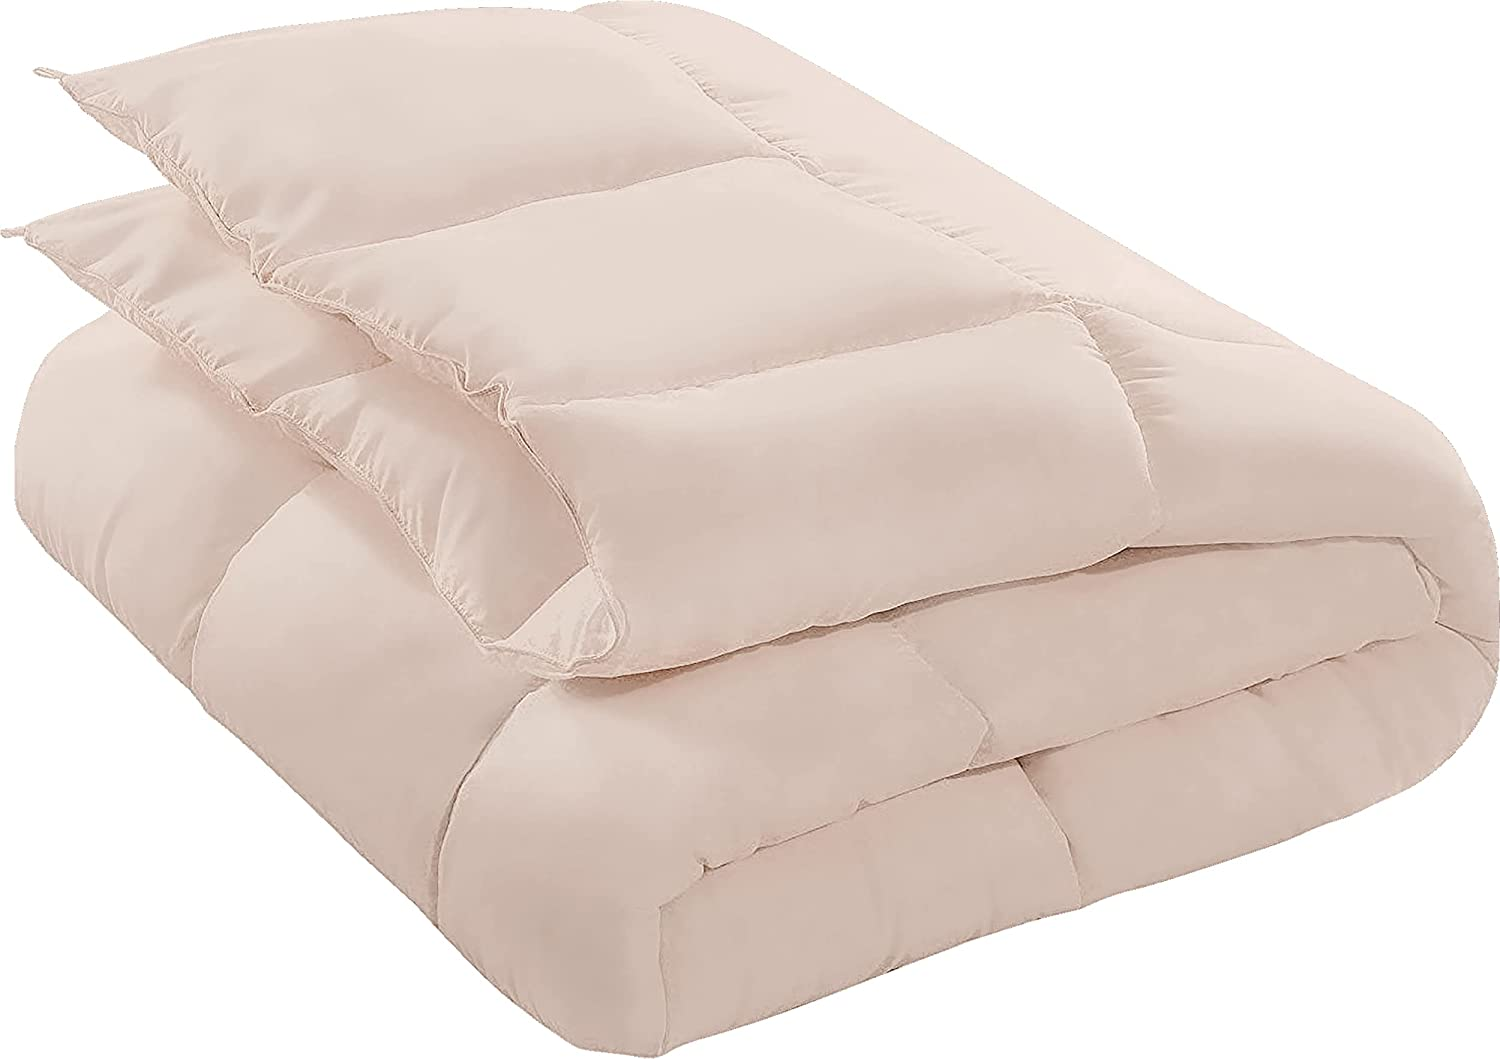  All Season 250 GSM Comforter - Soft down Alternative Comforter - Plush Siliconized Fiberfill Duvet Insert - Box Stitched (King/Cal King, Beige)